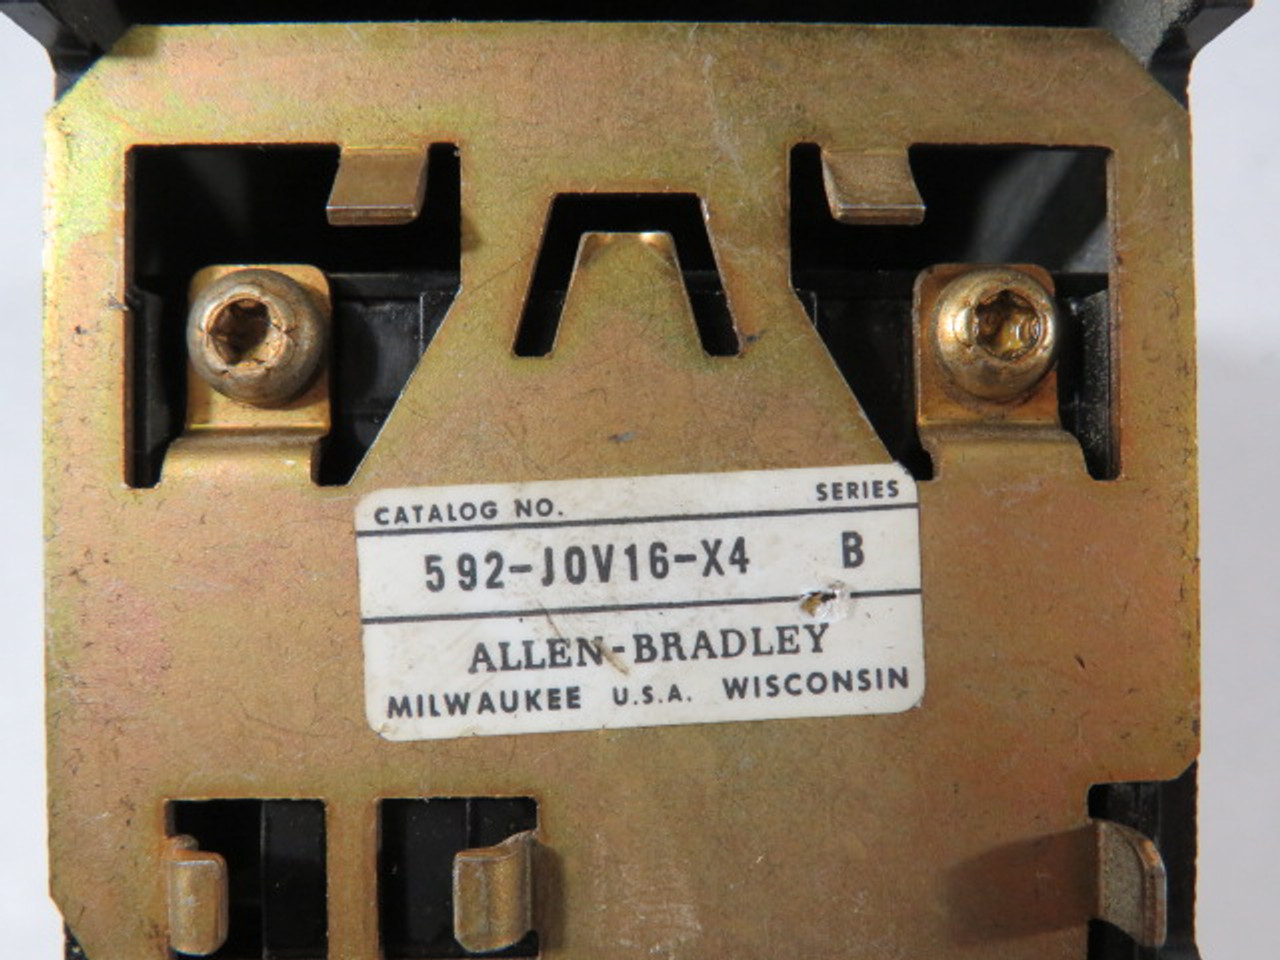 Allen-Bradley 592-J0V16-X4 600VAC Overload Relay USED